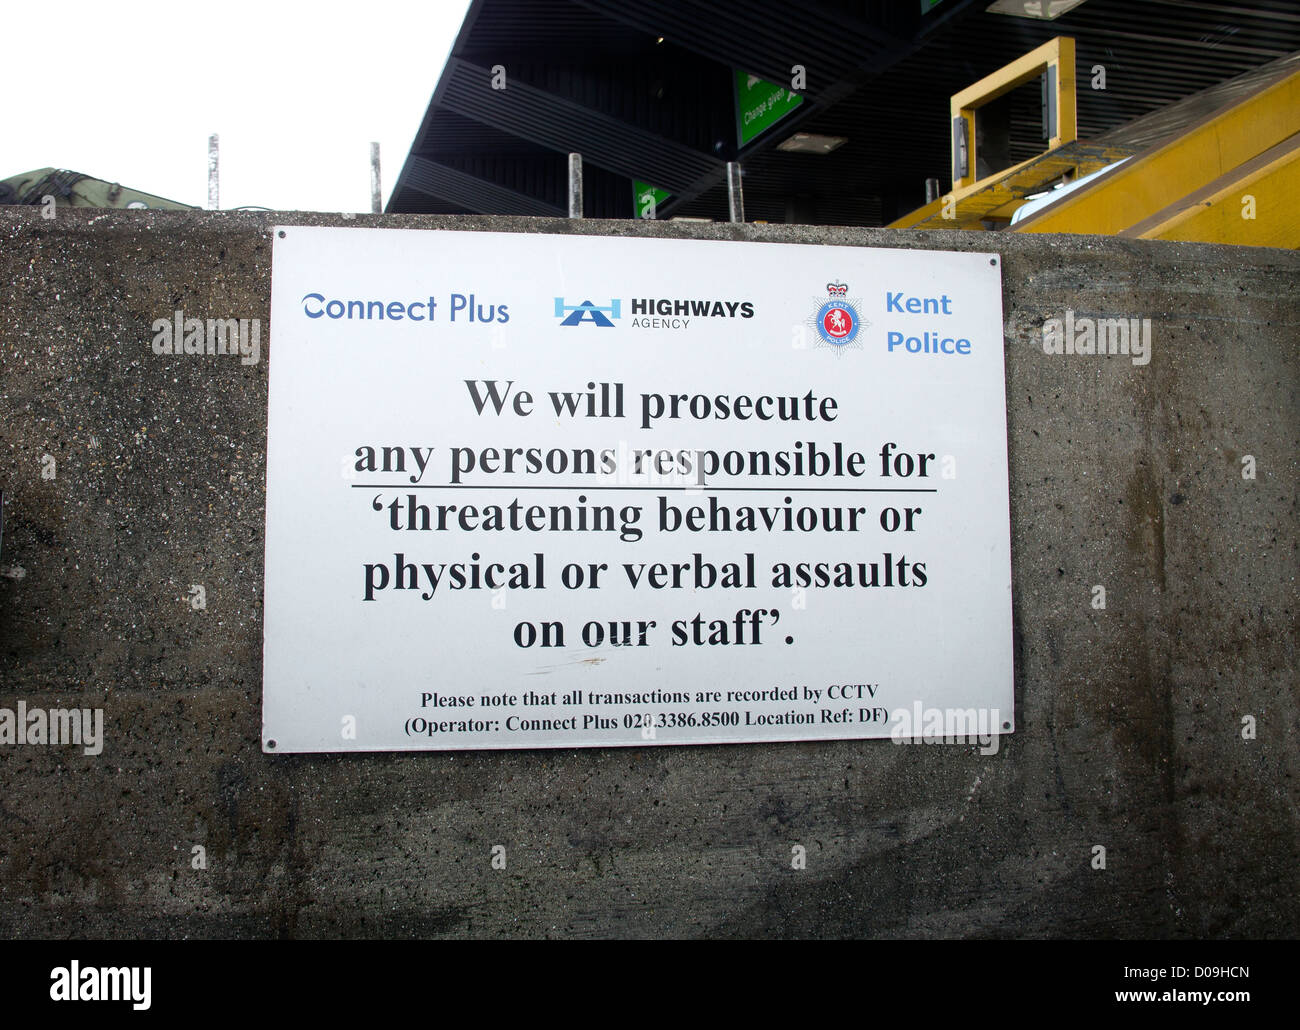 Warning Sign Threatening Behaviour on Staff Prosecute Prosecution Dartford Crossing Tolls Stock Photo